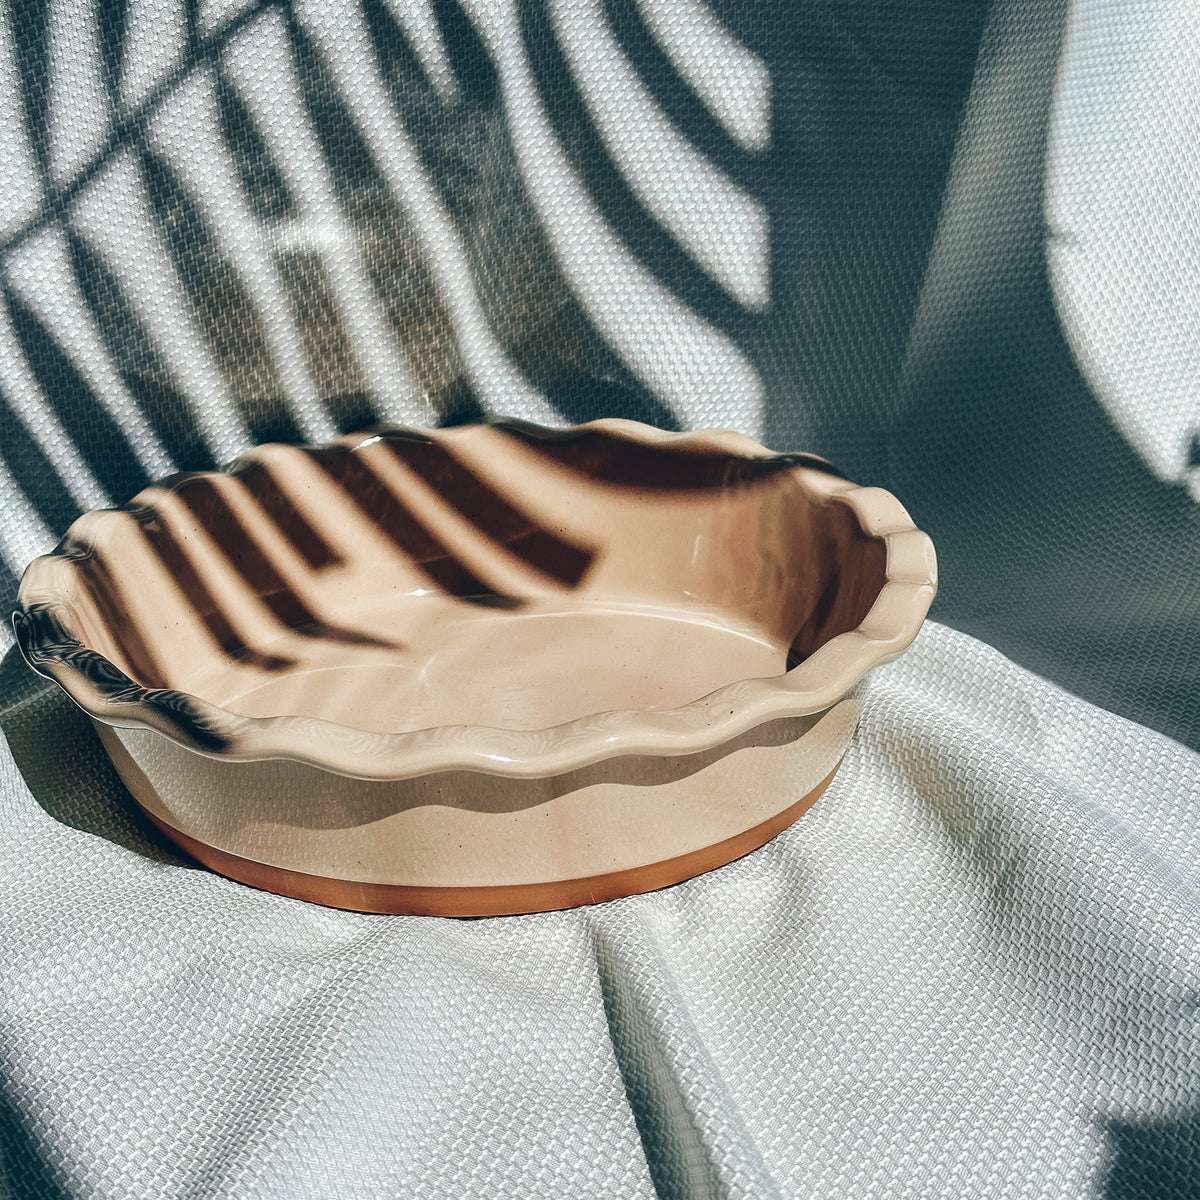 Mora Ceramic Deep Fluted Pie Dish for Baking - 9 inch Porcelain Pie Plate  for Apple, Quiche, Pot Pies, Tart, etc. - Modern Farmhouse Style - Vanilla